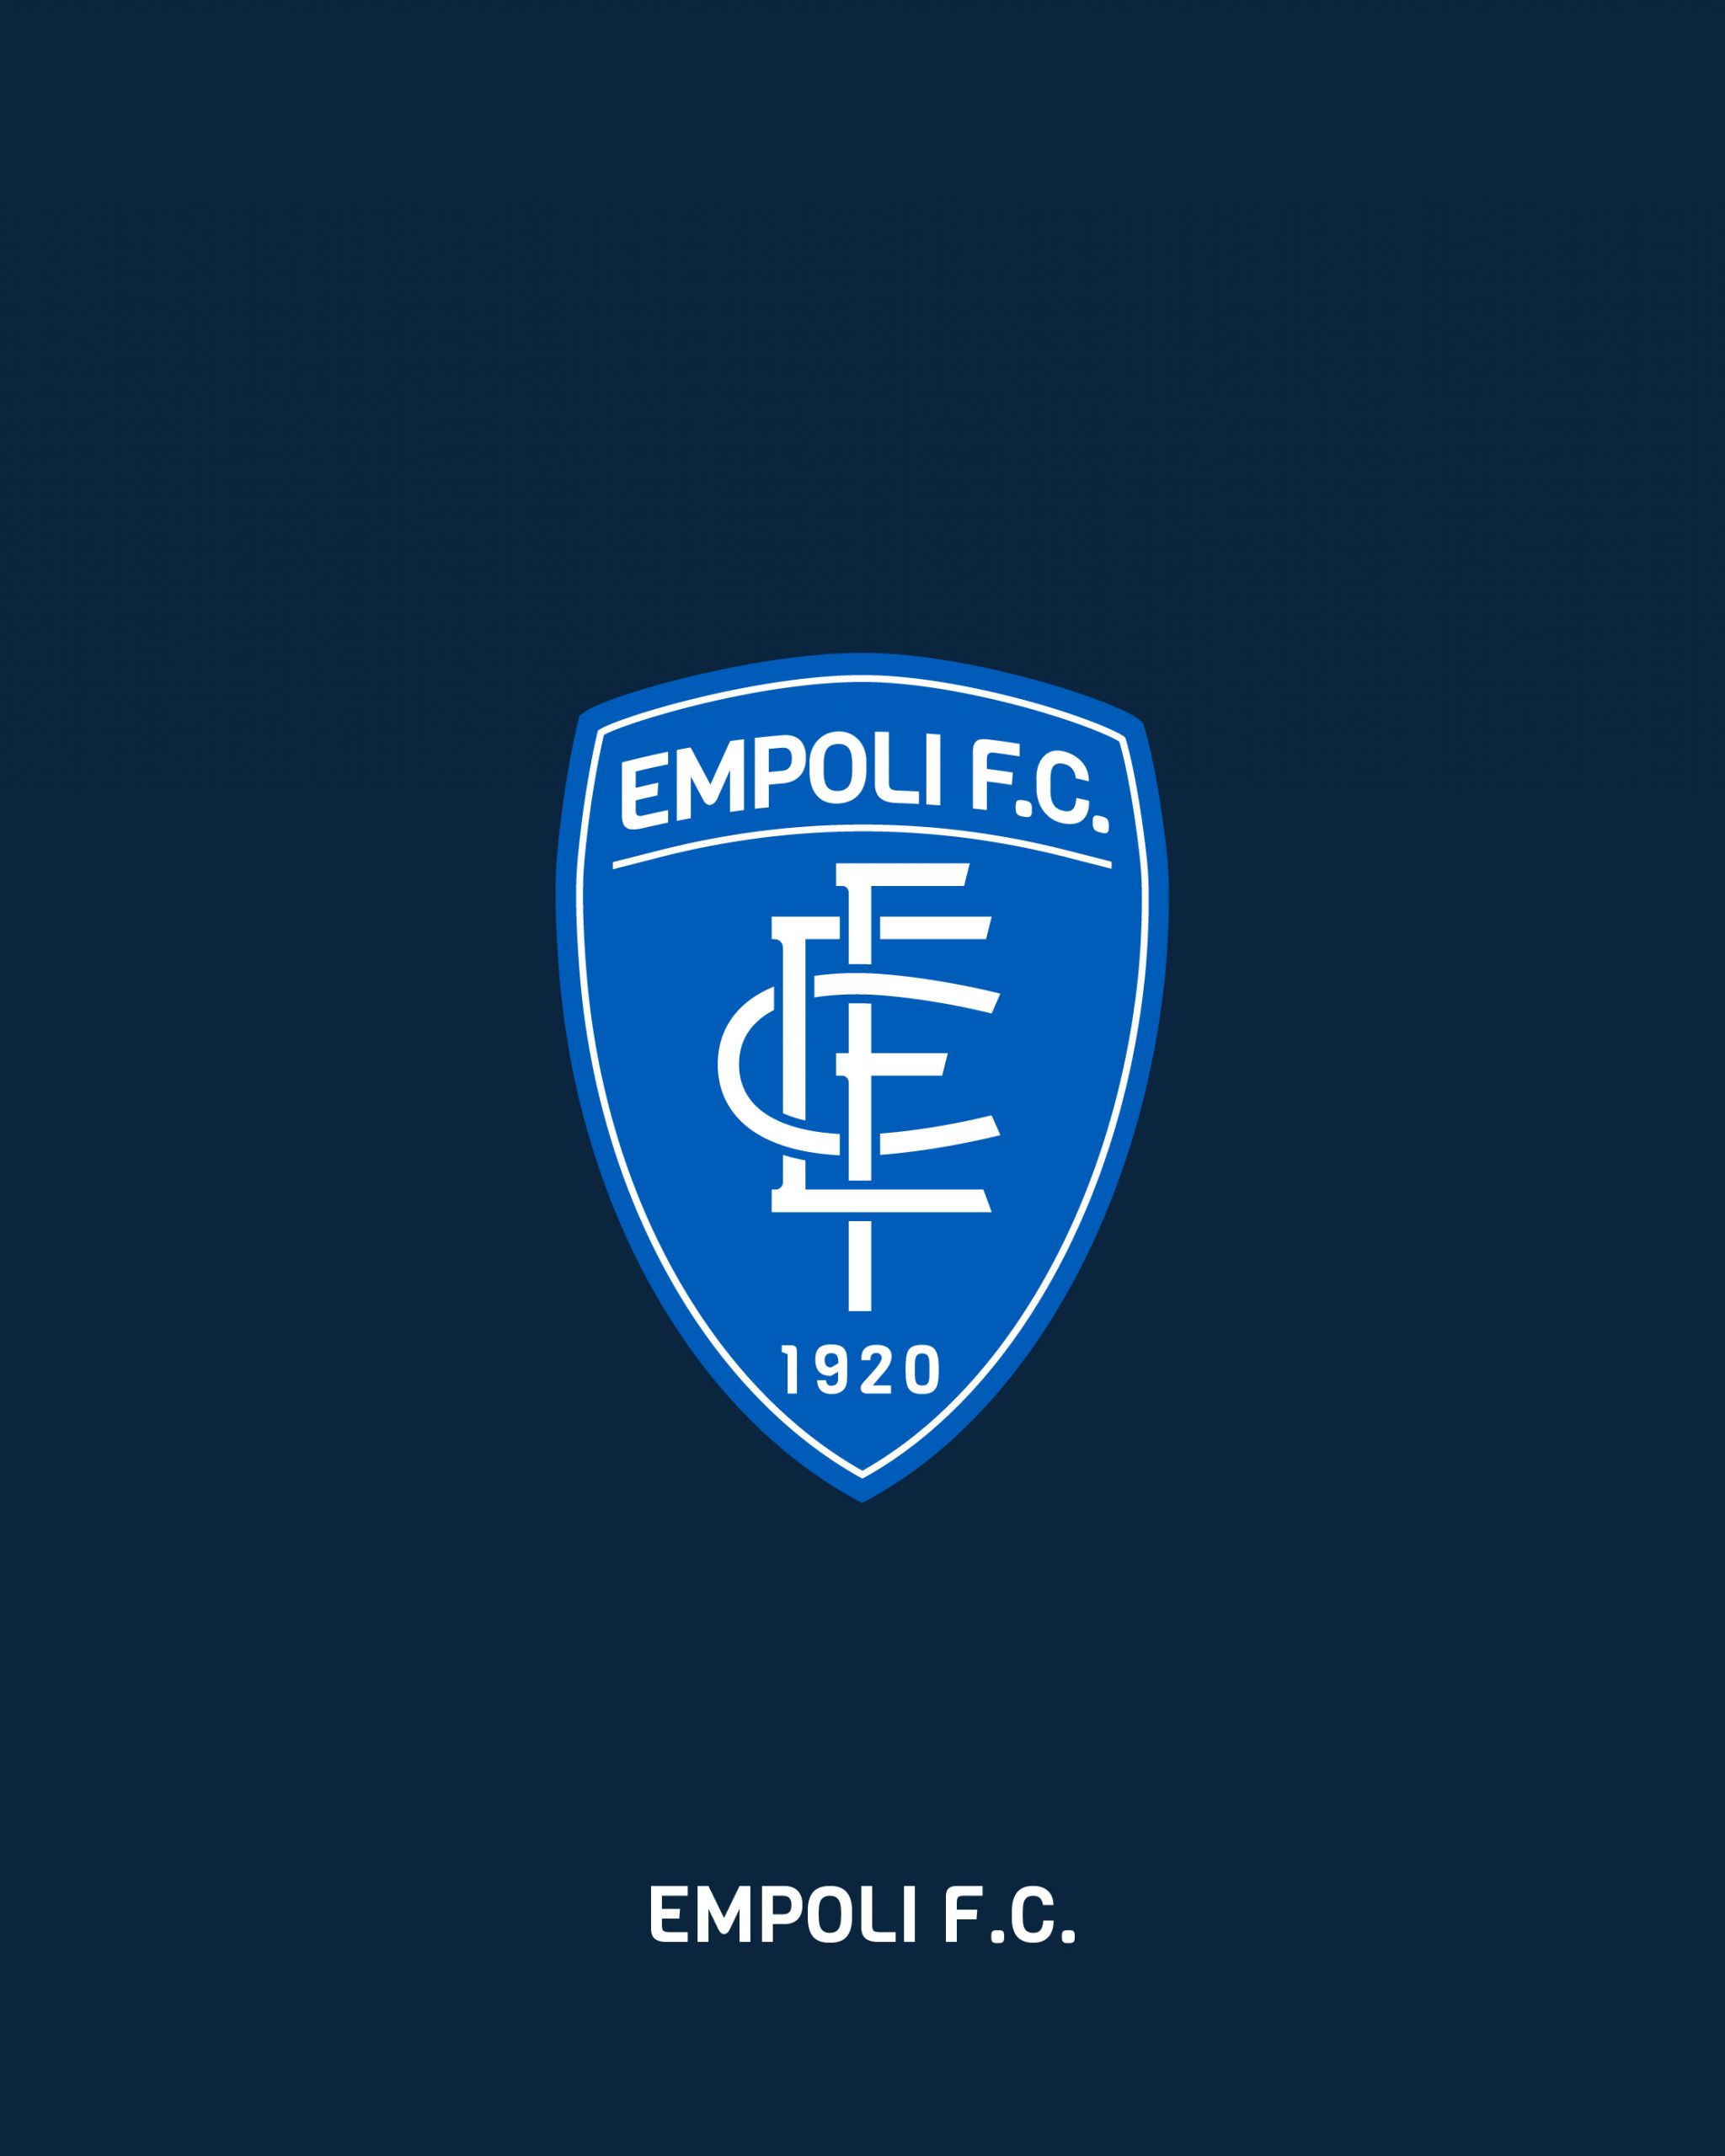 Empoli F.C. 1920